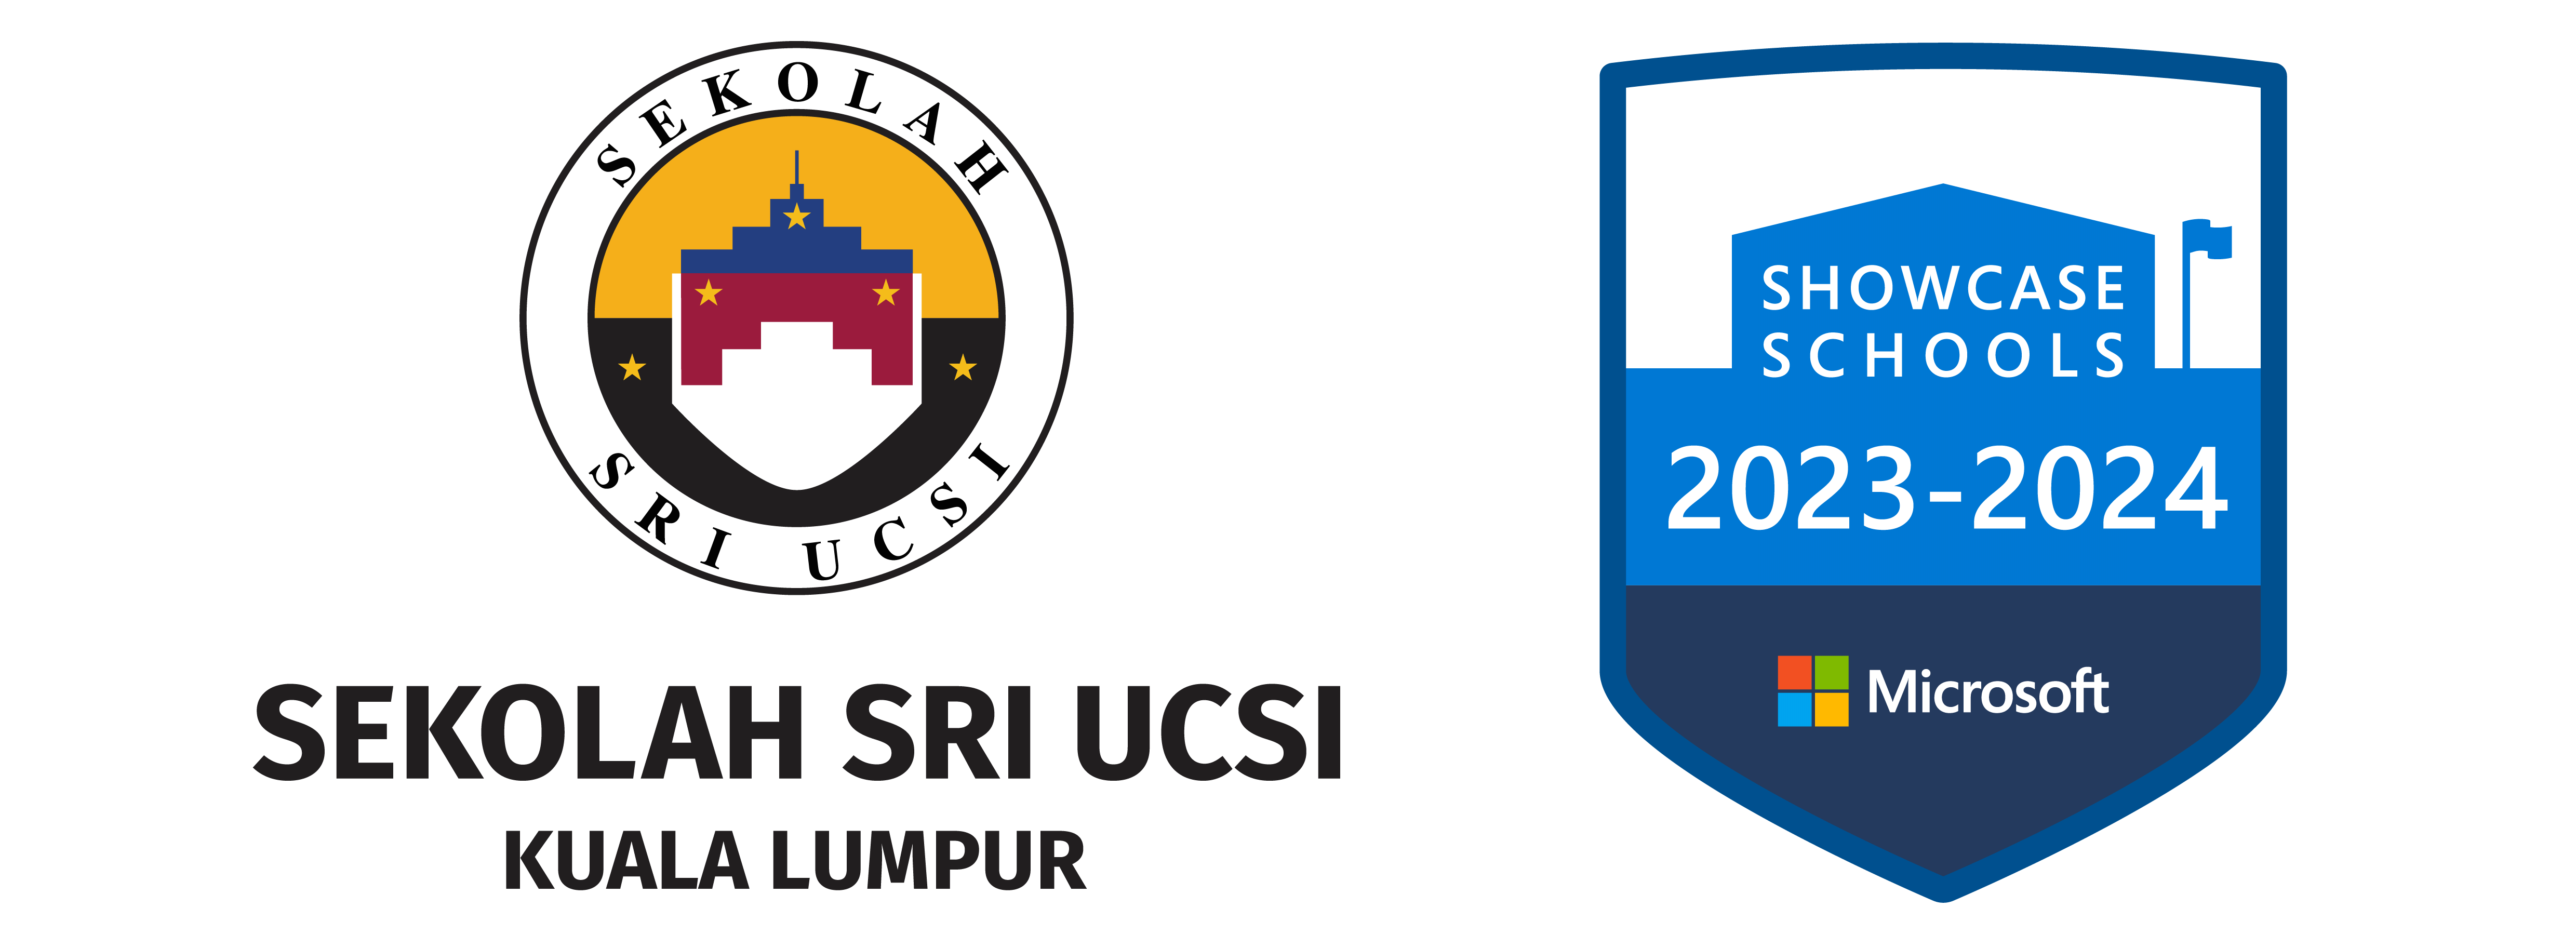 Sekolah Sri UCSI Kuala Lumpur